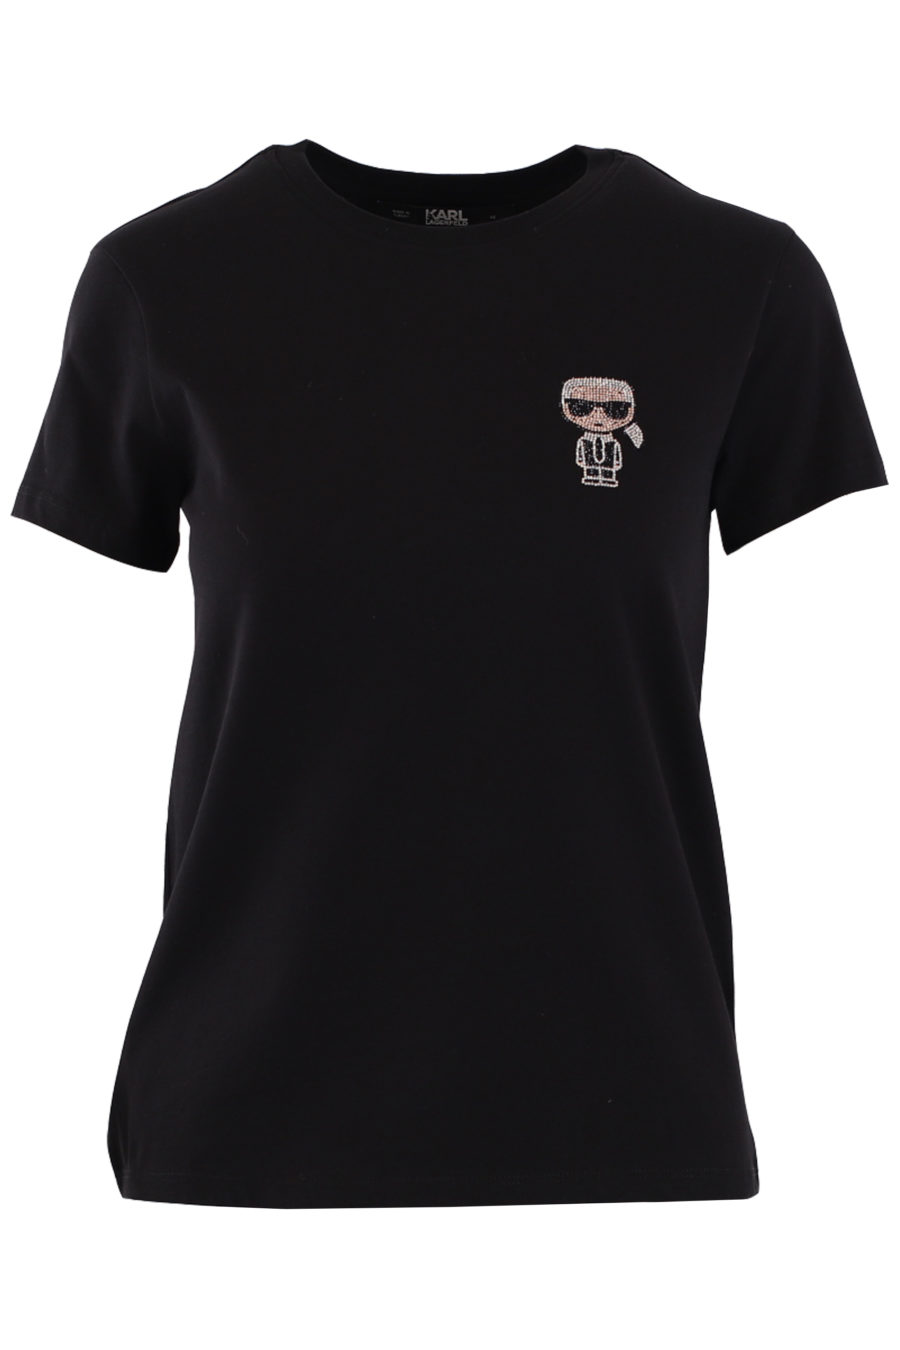 T-shirt noir avec petit logo en strass - IMG 9023